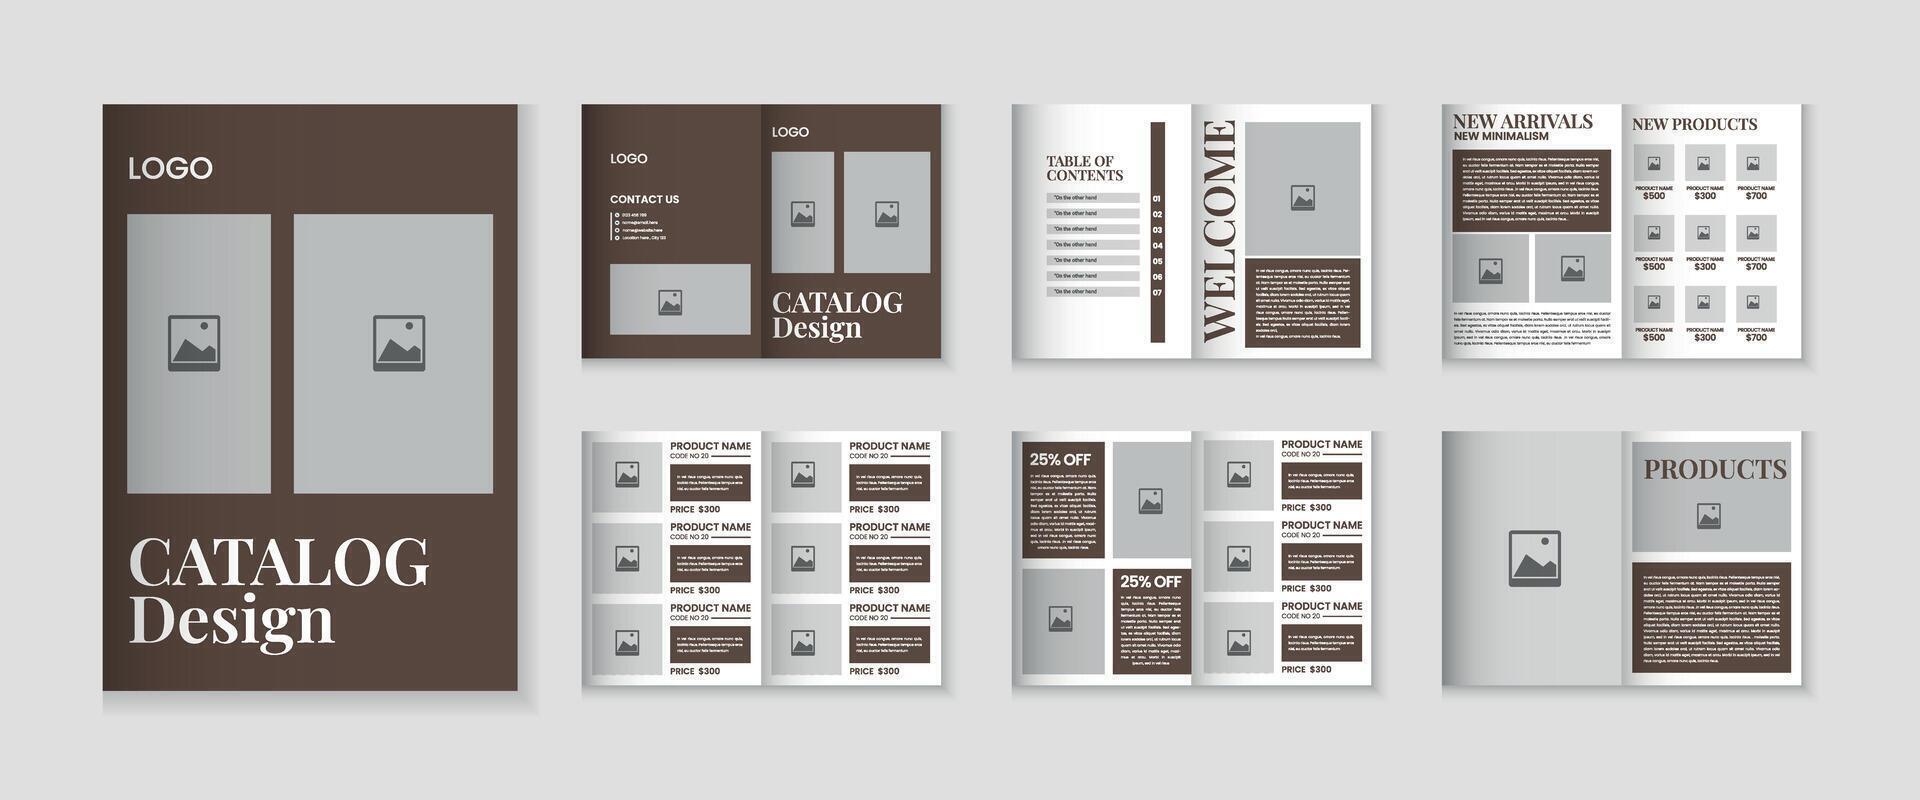 Katalog Design oder 12 Seiten Produkt Katalog Vorlage Design vektor